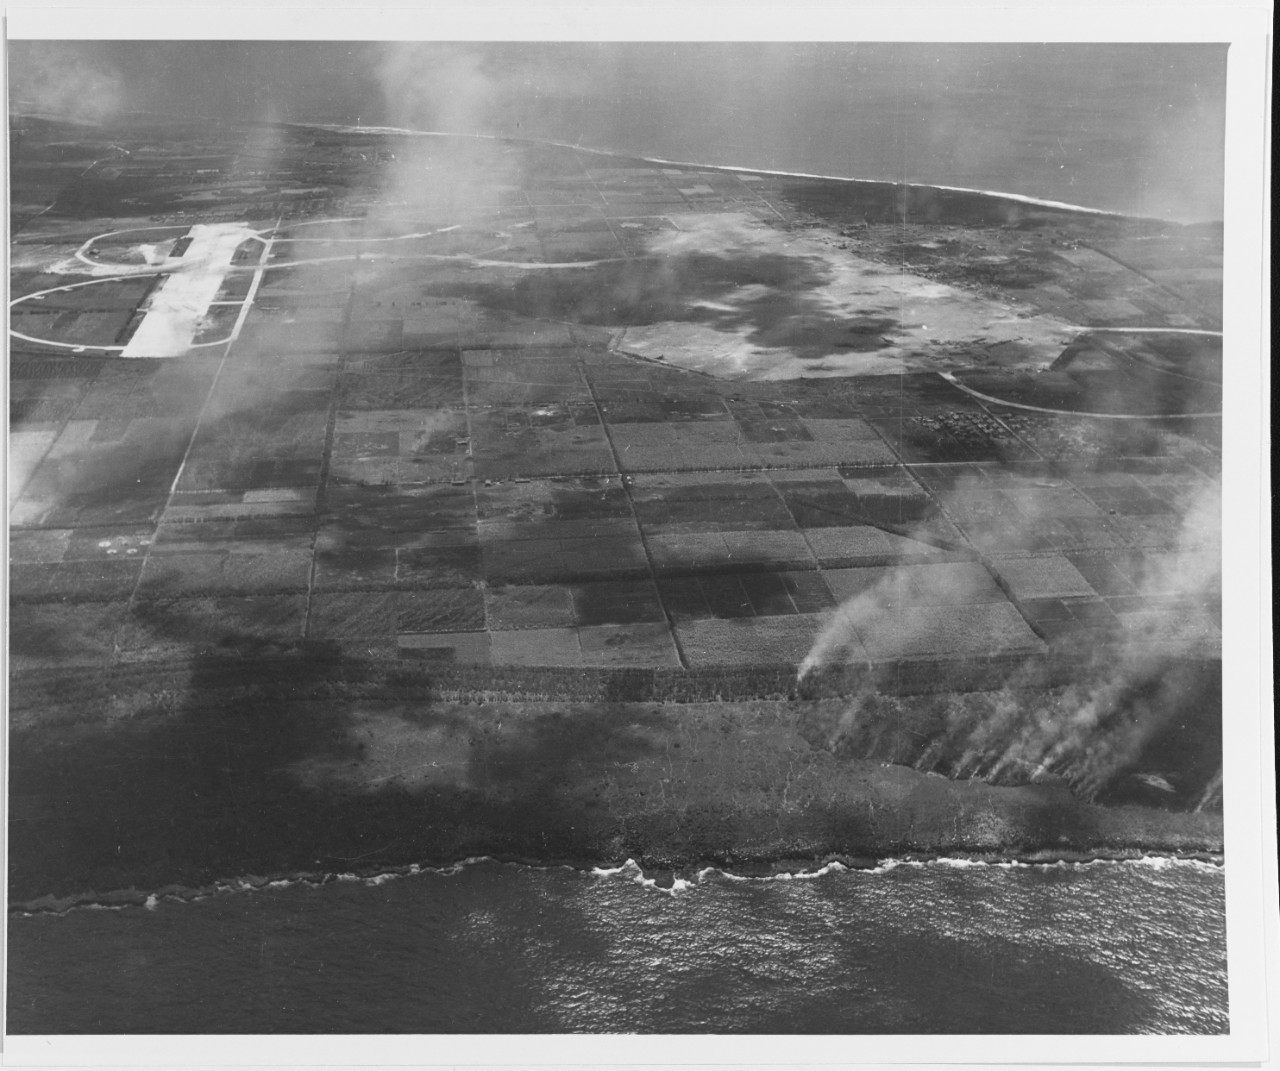 Saipan Operation, June 1944